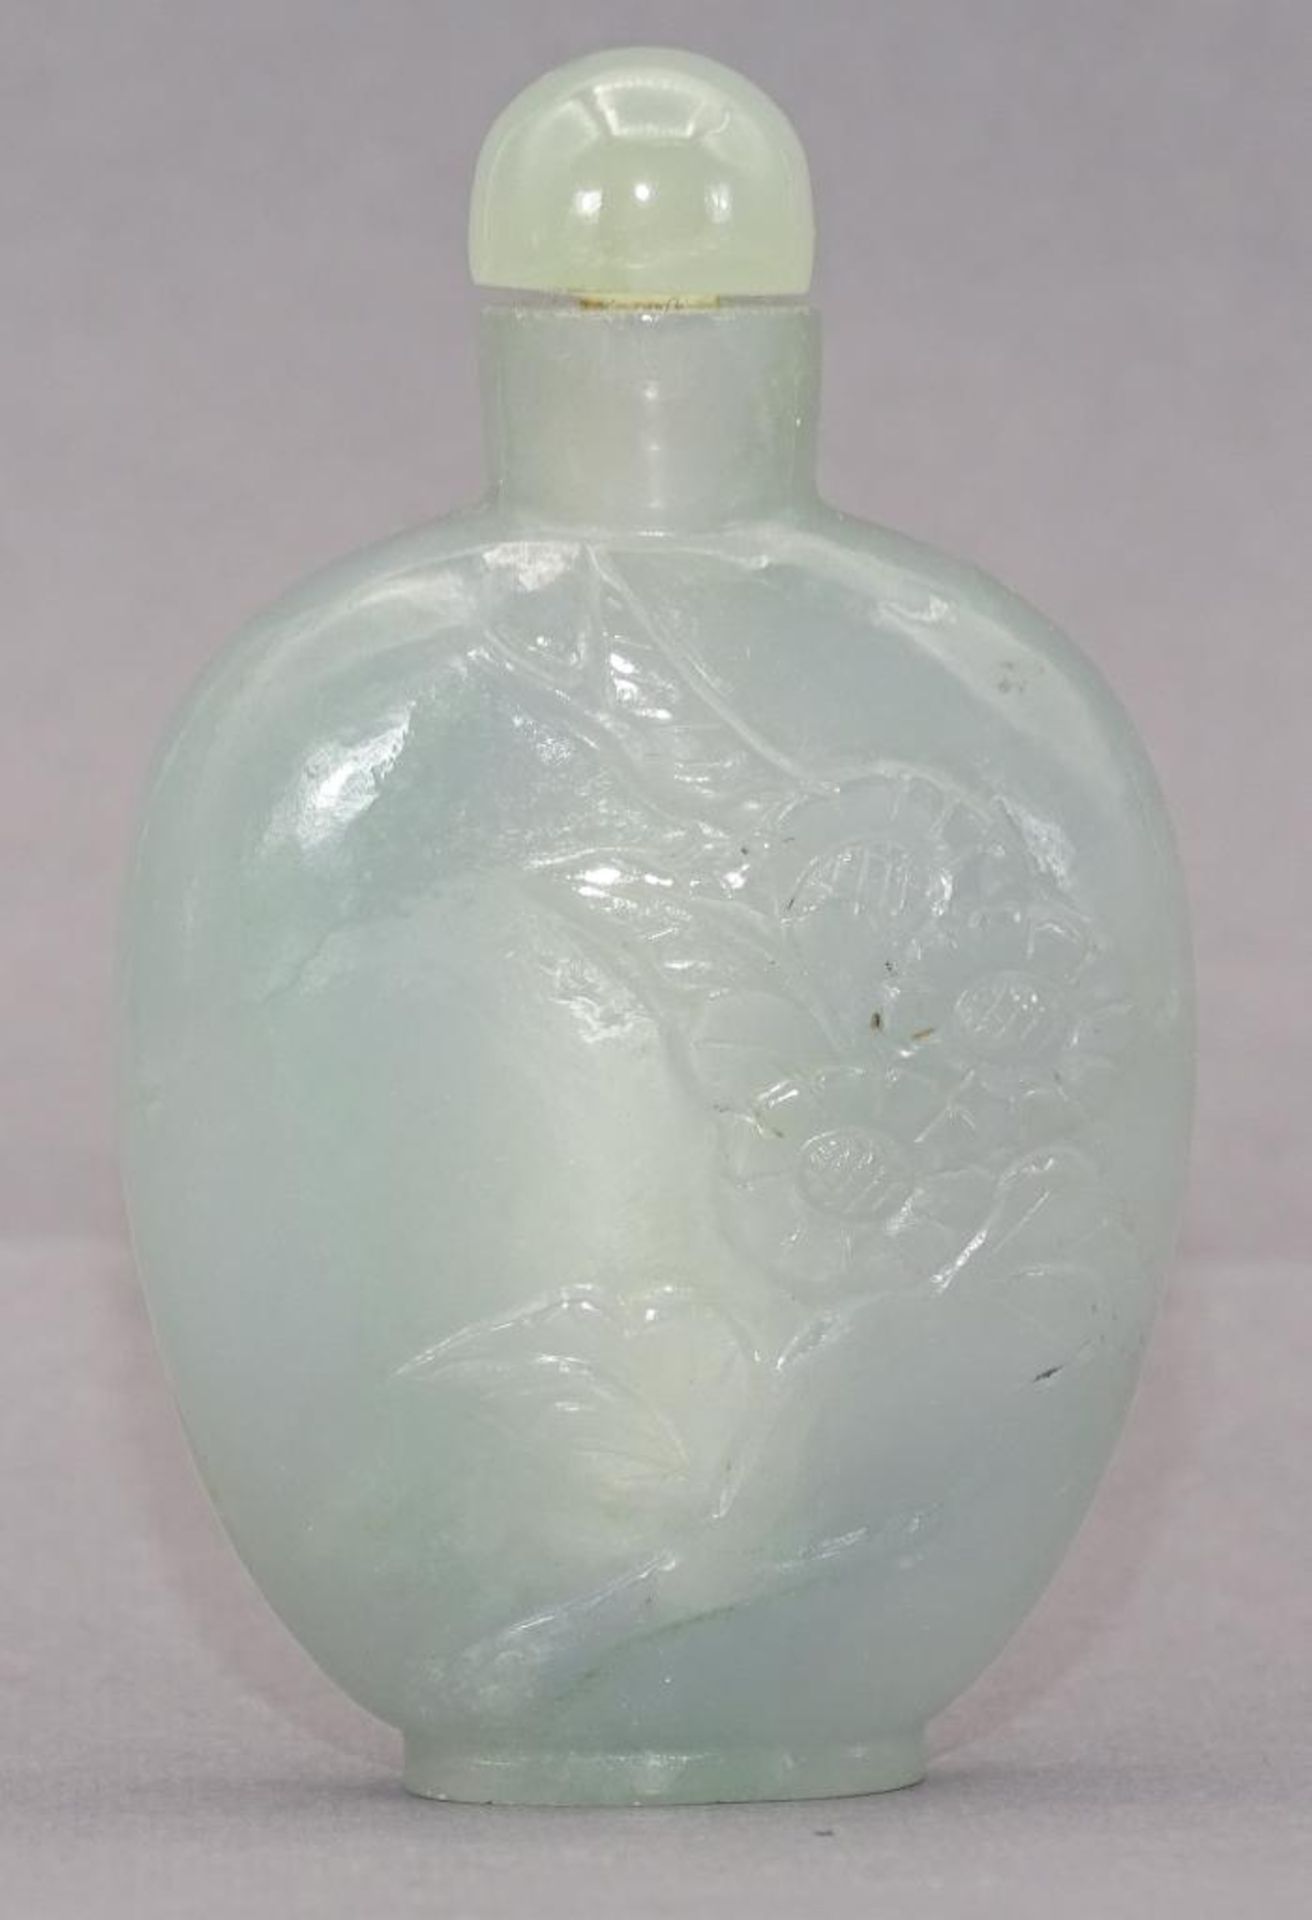 kl. Snuff Bottle,wohl Jade, China, h-6 cm, B-3,5 cm- - -22.61 % buyer's premium on the hammer